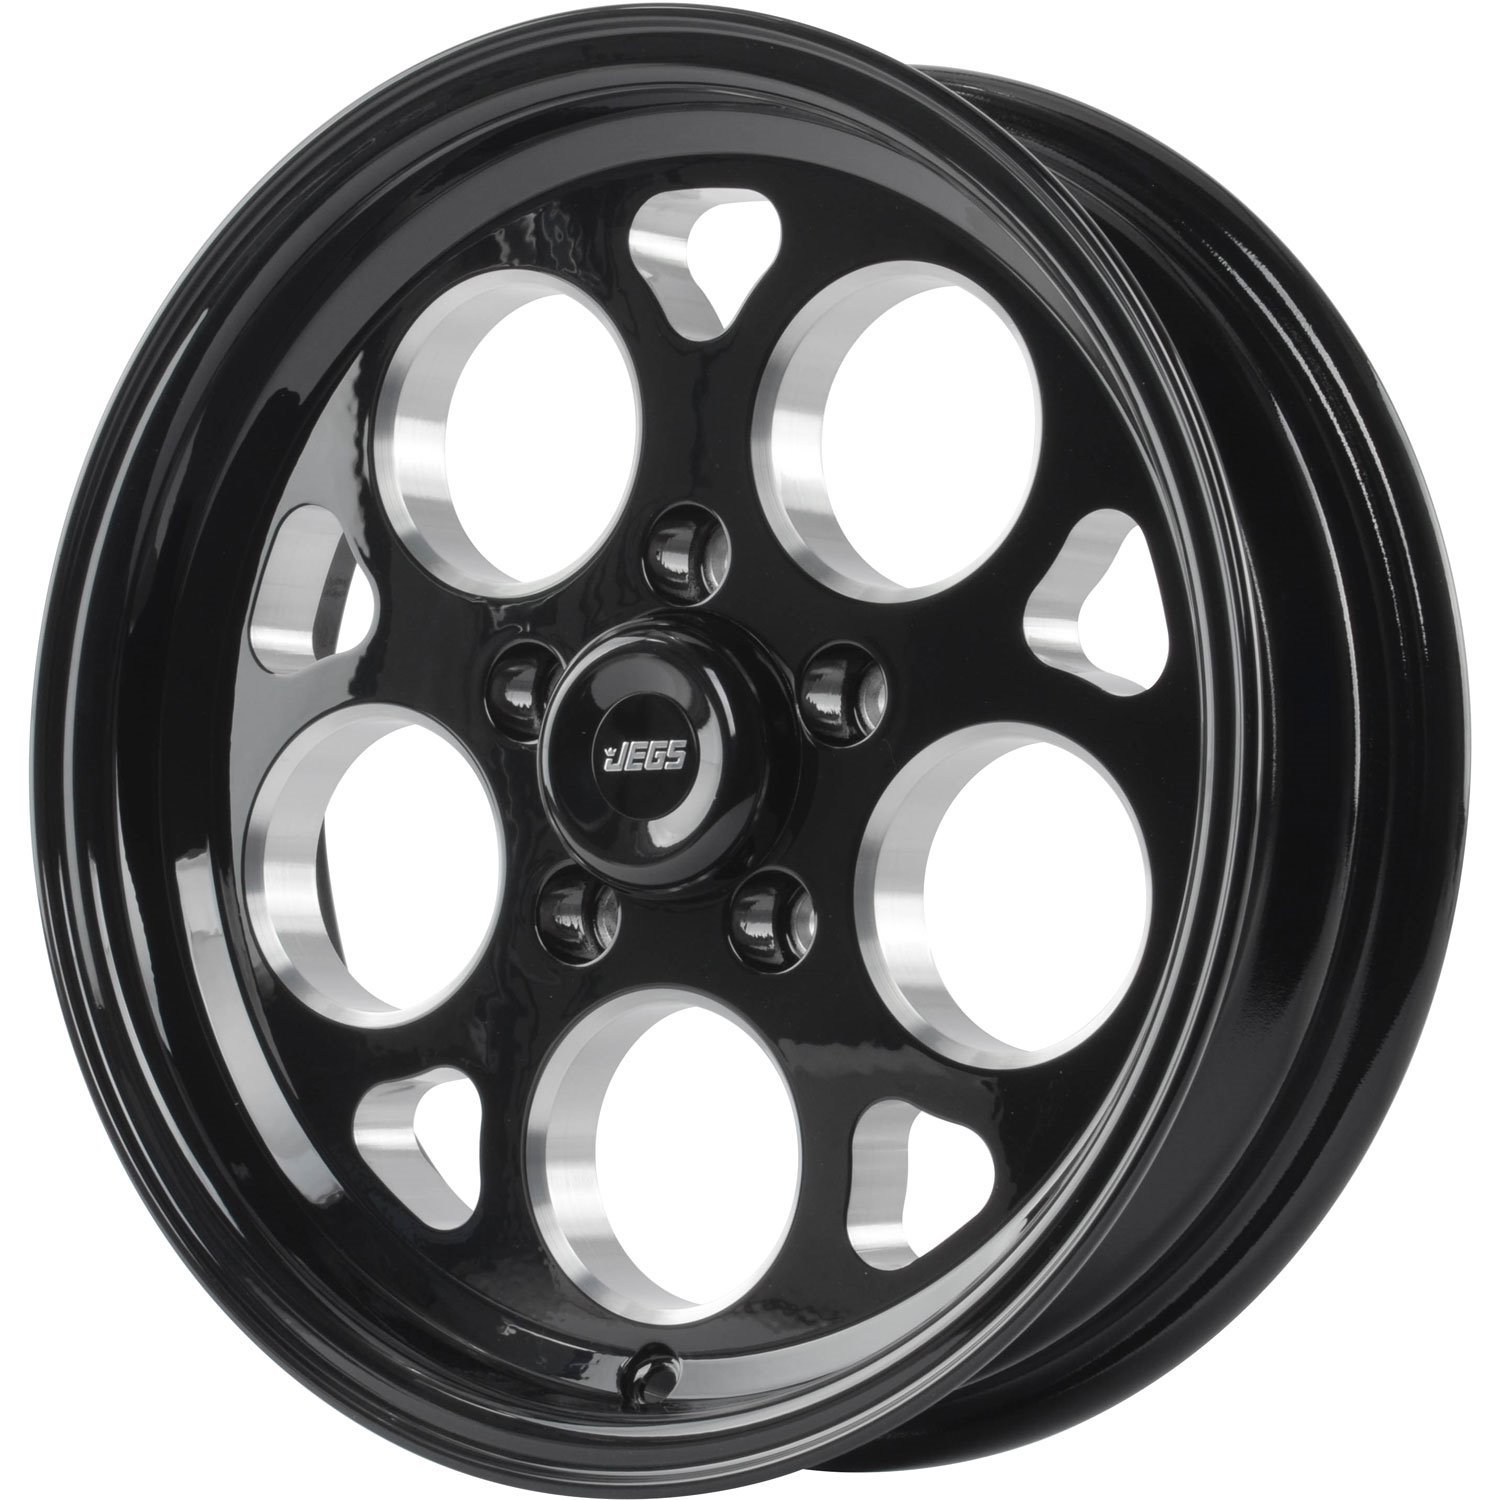 SSR Mag Wheel [Size: 15" x 4"] Black